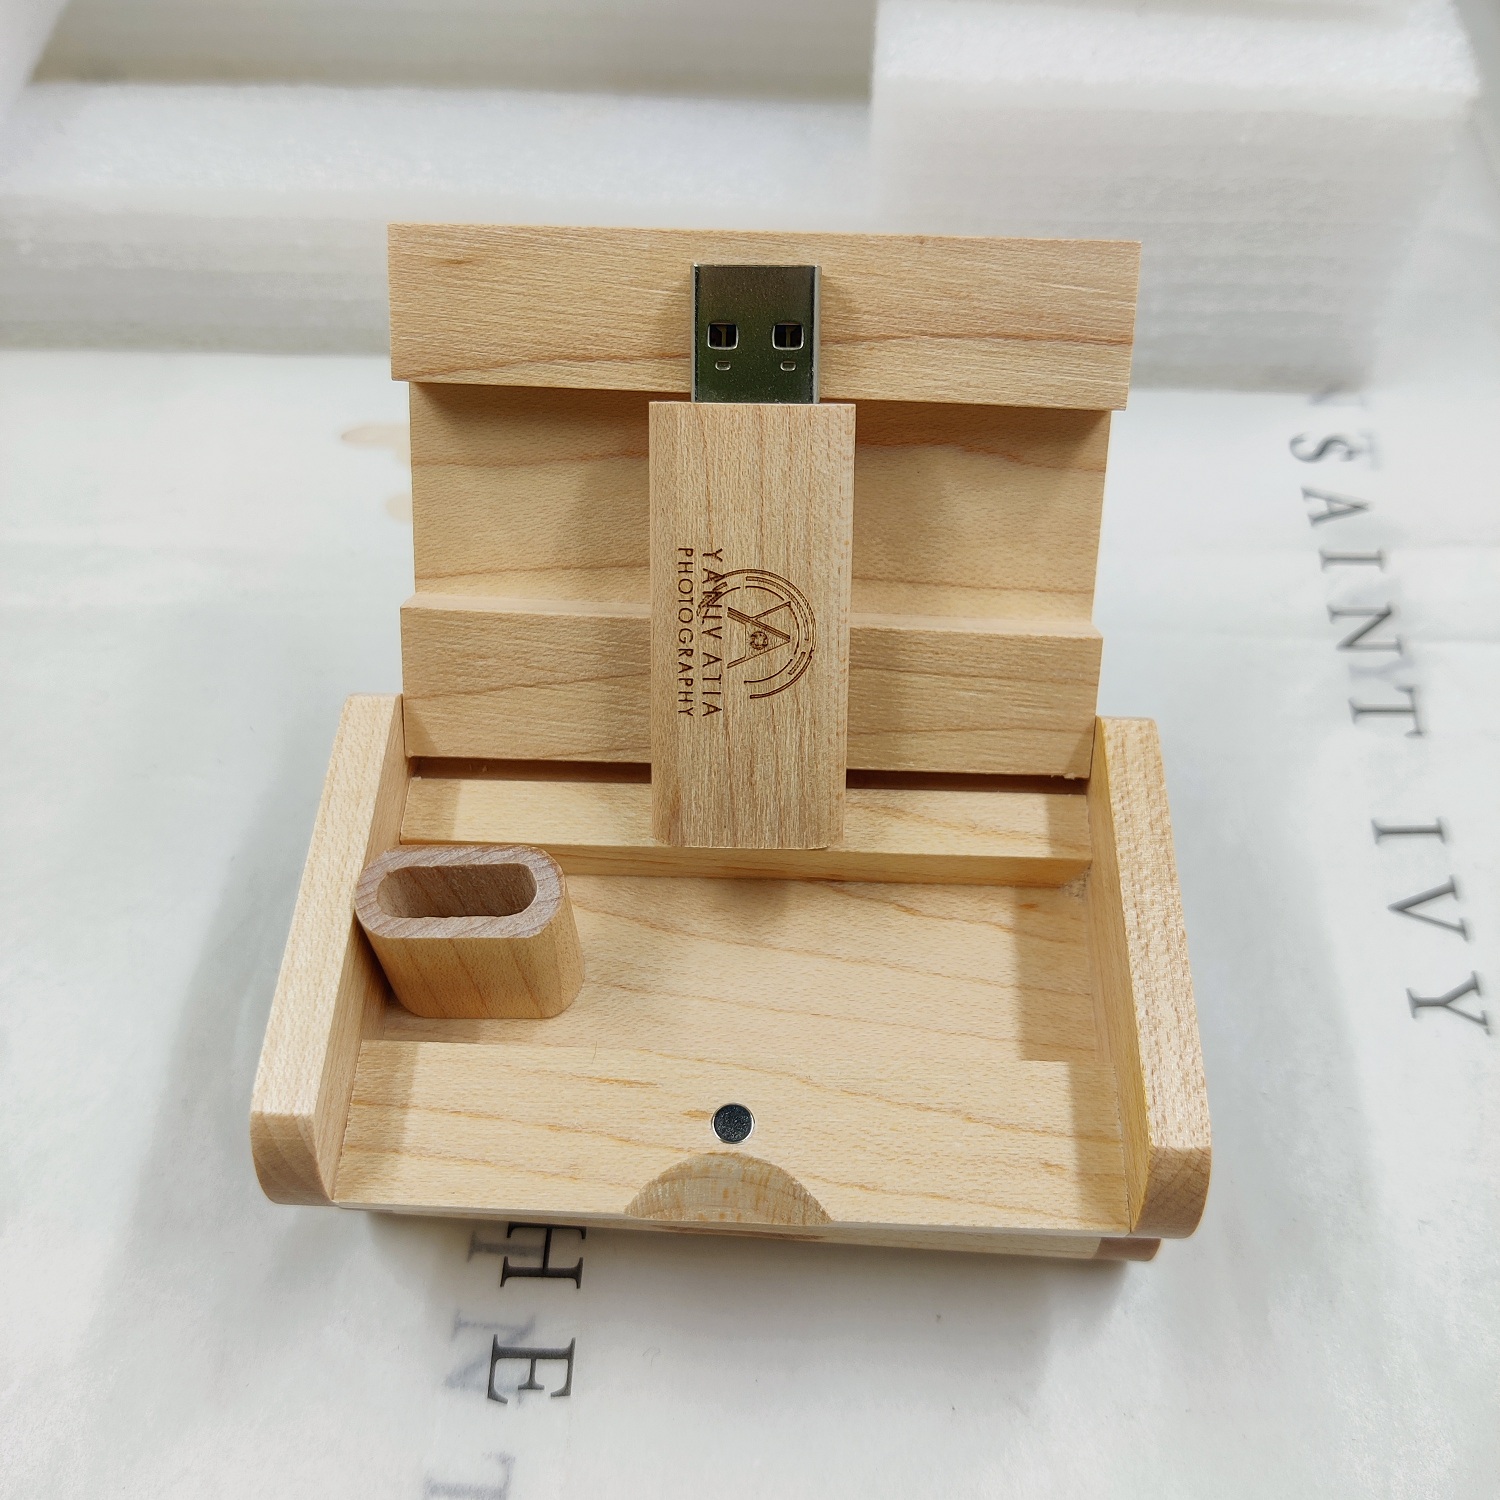 Maple Wooden USB sticks 3.0 32GB LOGO engraved box package custom